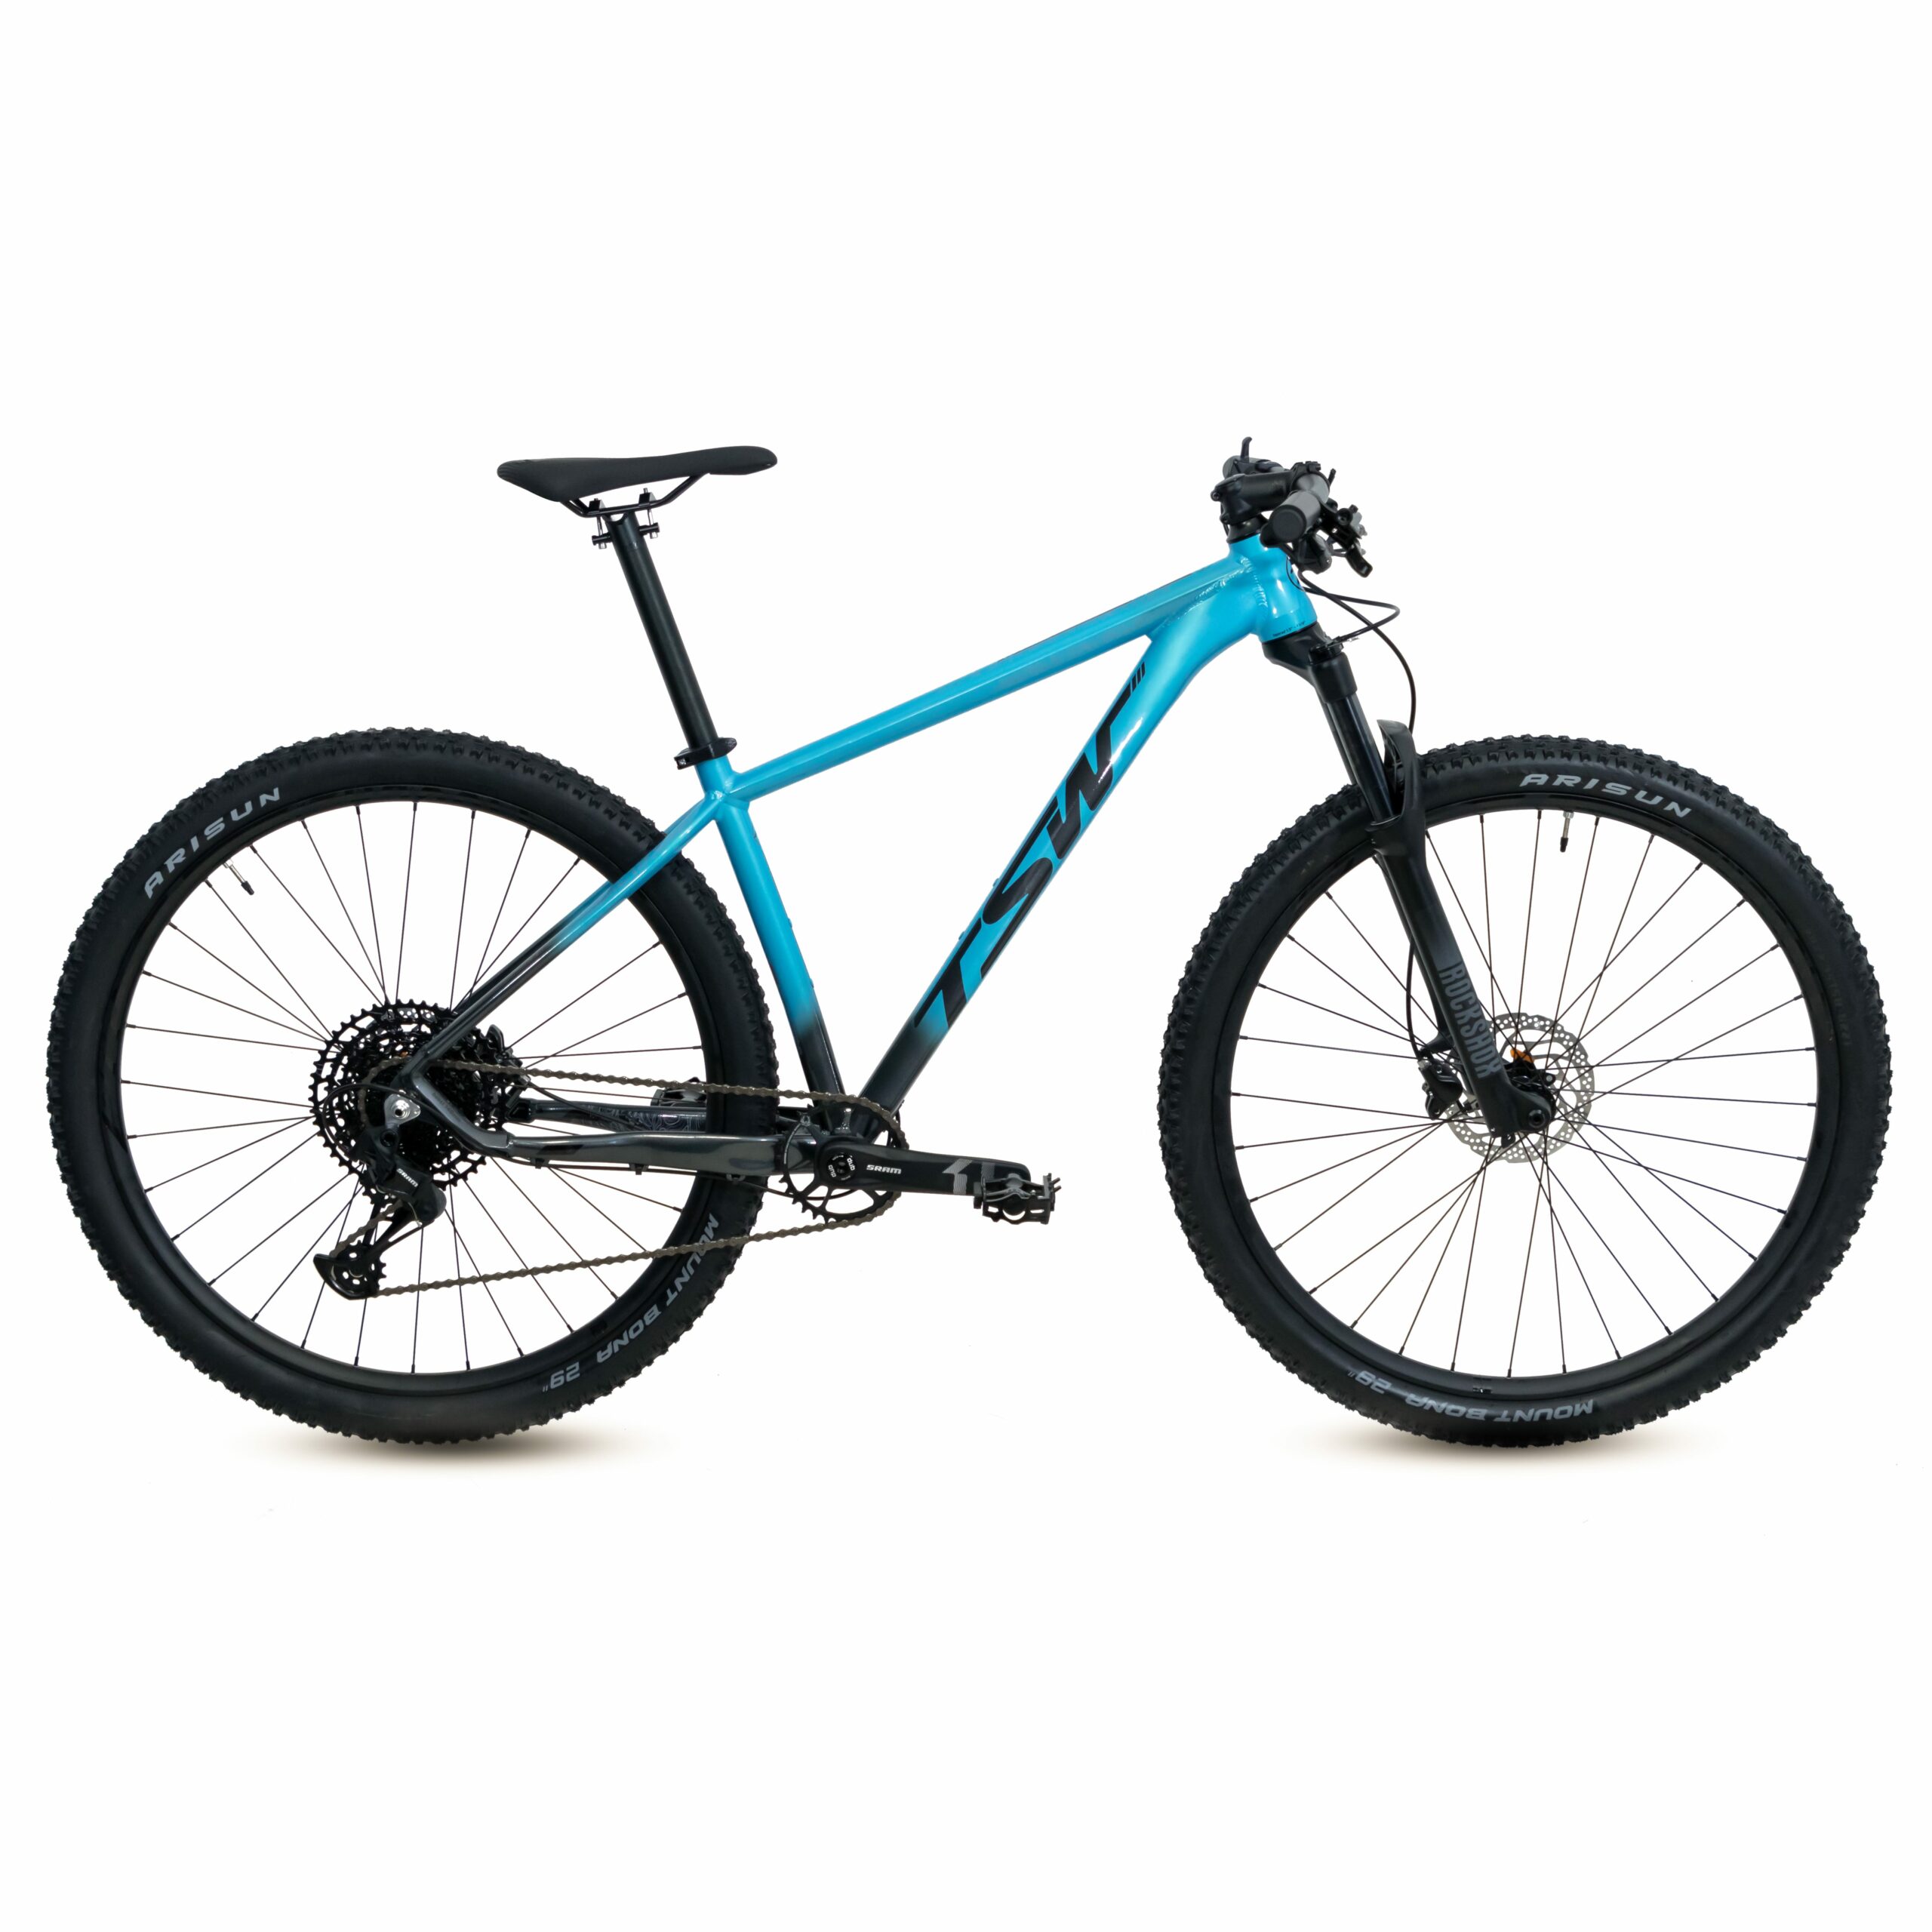 Bicicleta TSW Yukon | SM-12 | 2021/2022 - 15.5", Azul/Cinza